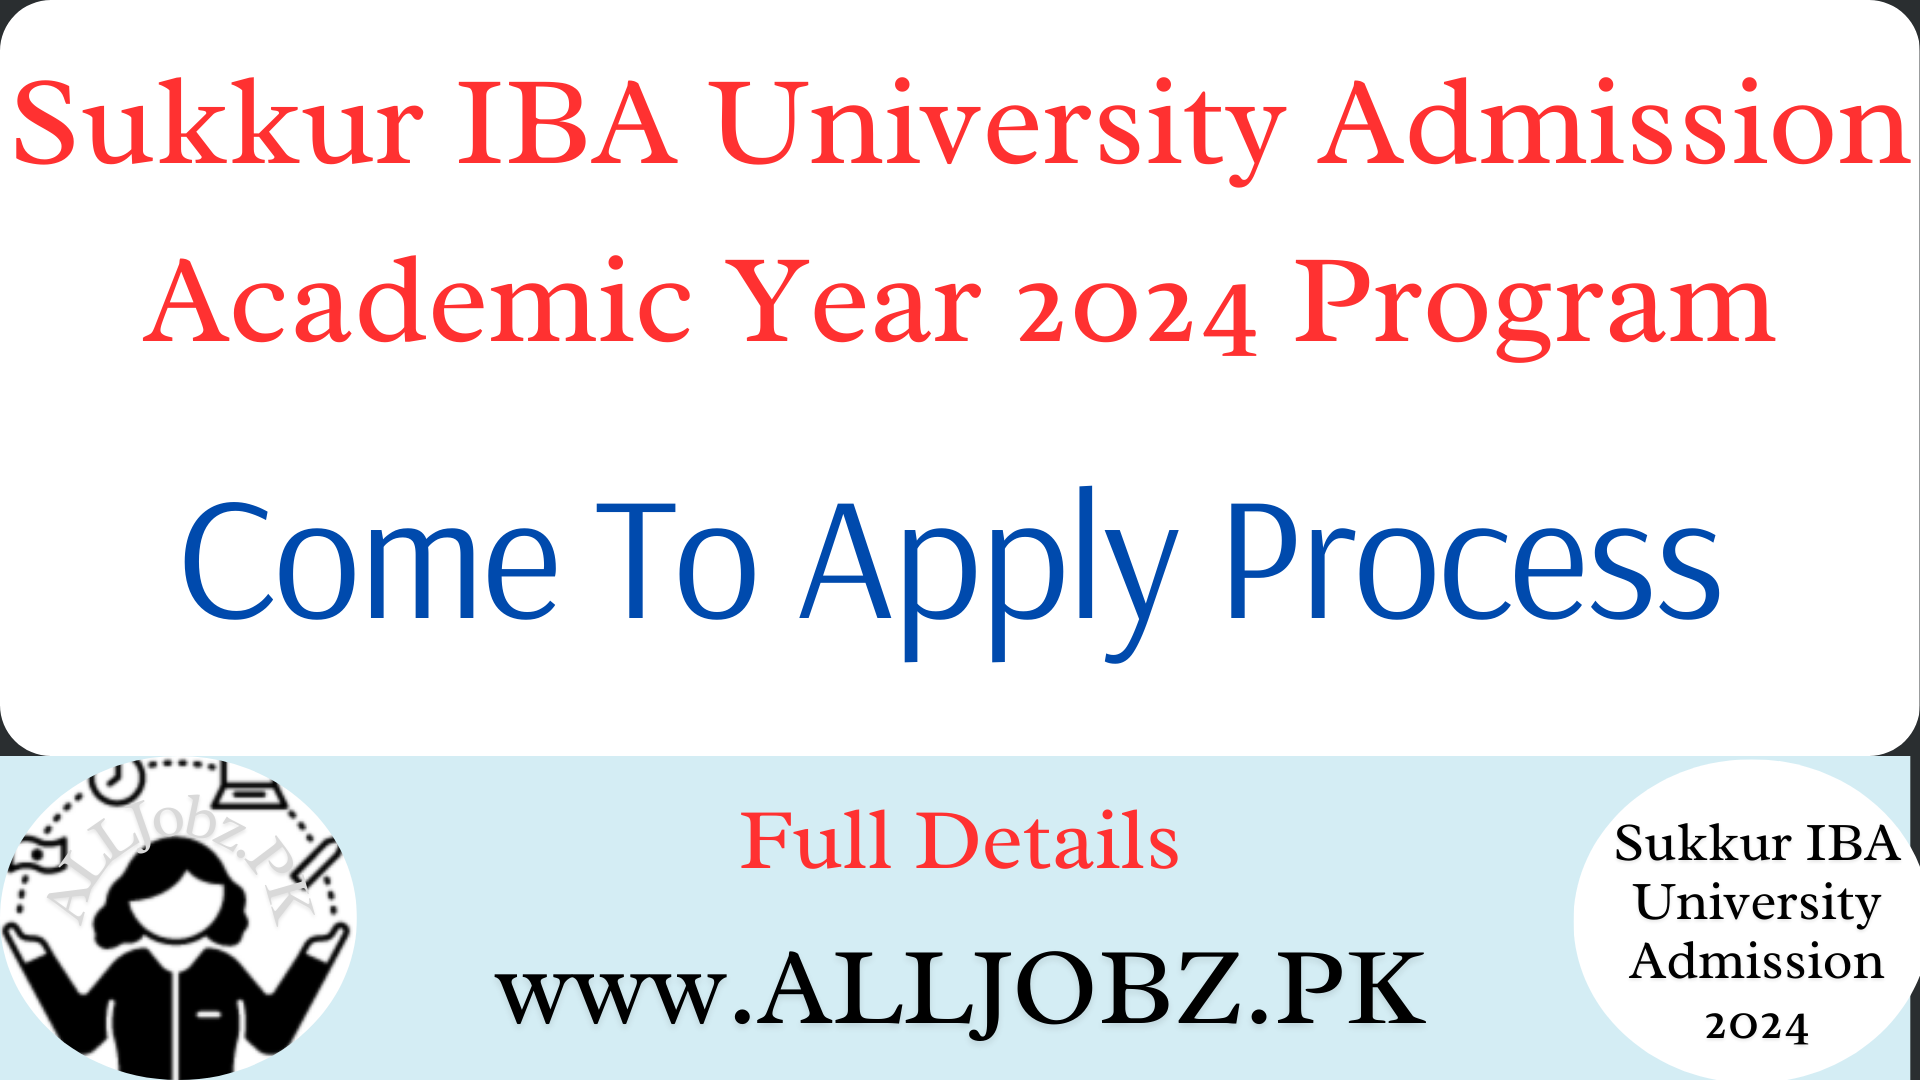 Sukkur Iba University Admission Academic Year 2024